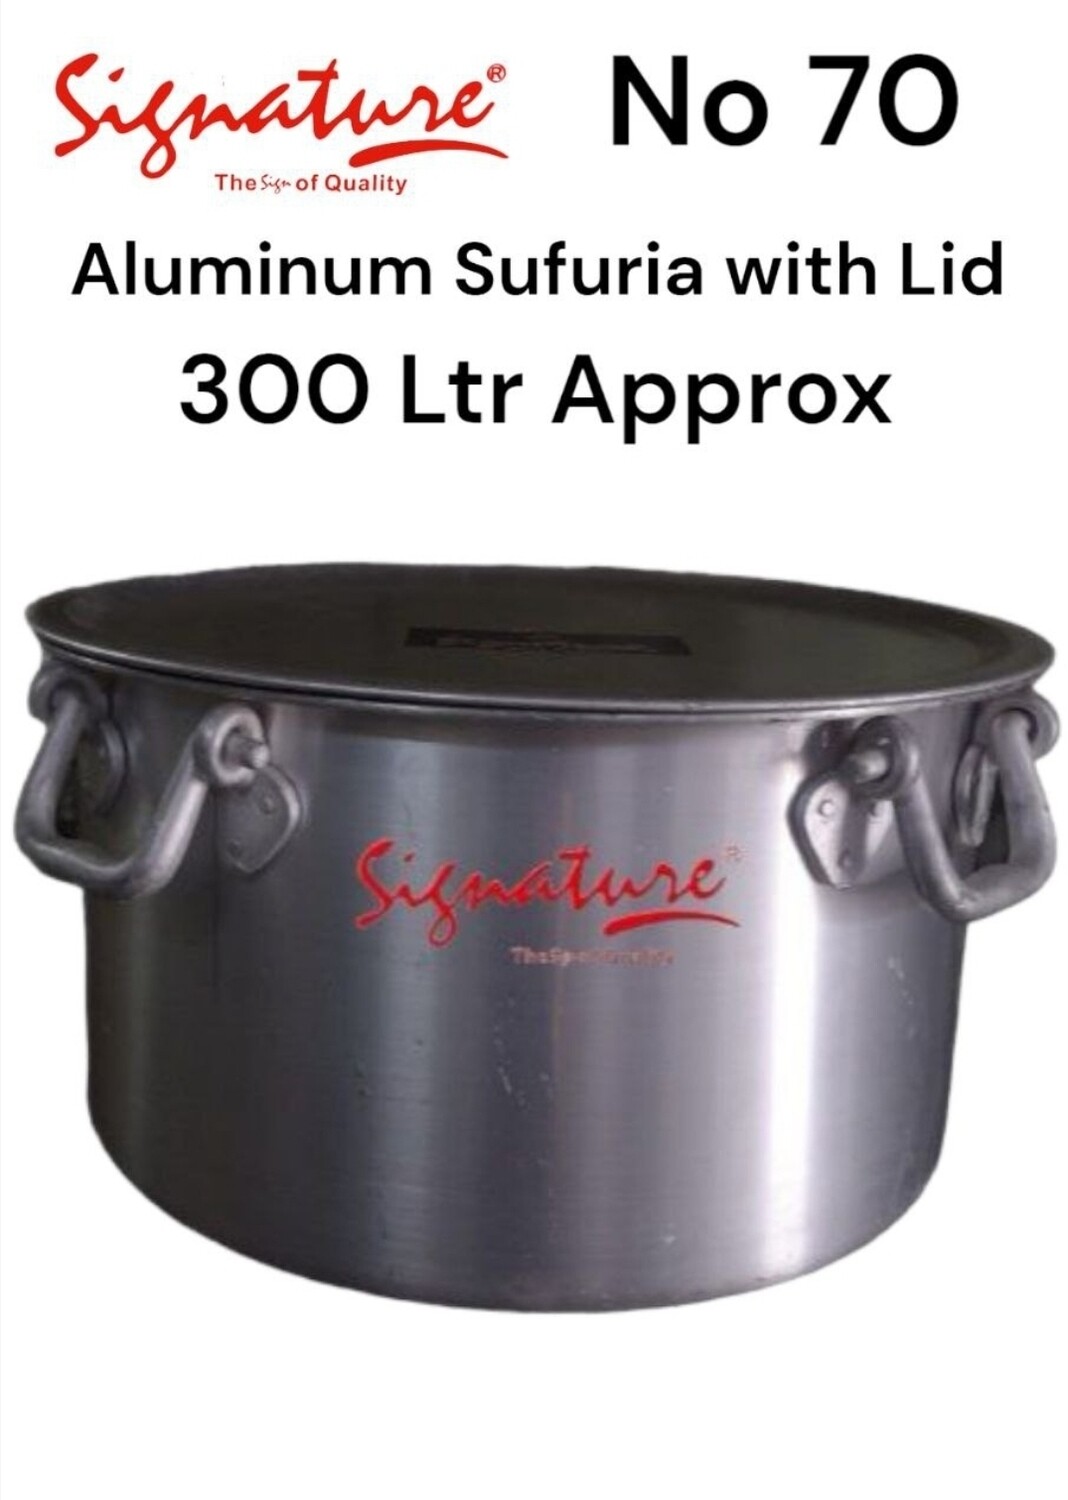 Signature heavy duty aluminium sufuria with lid 300litres